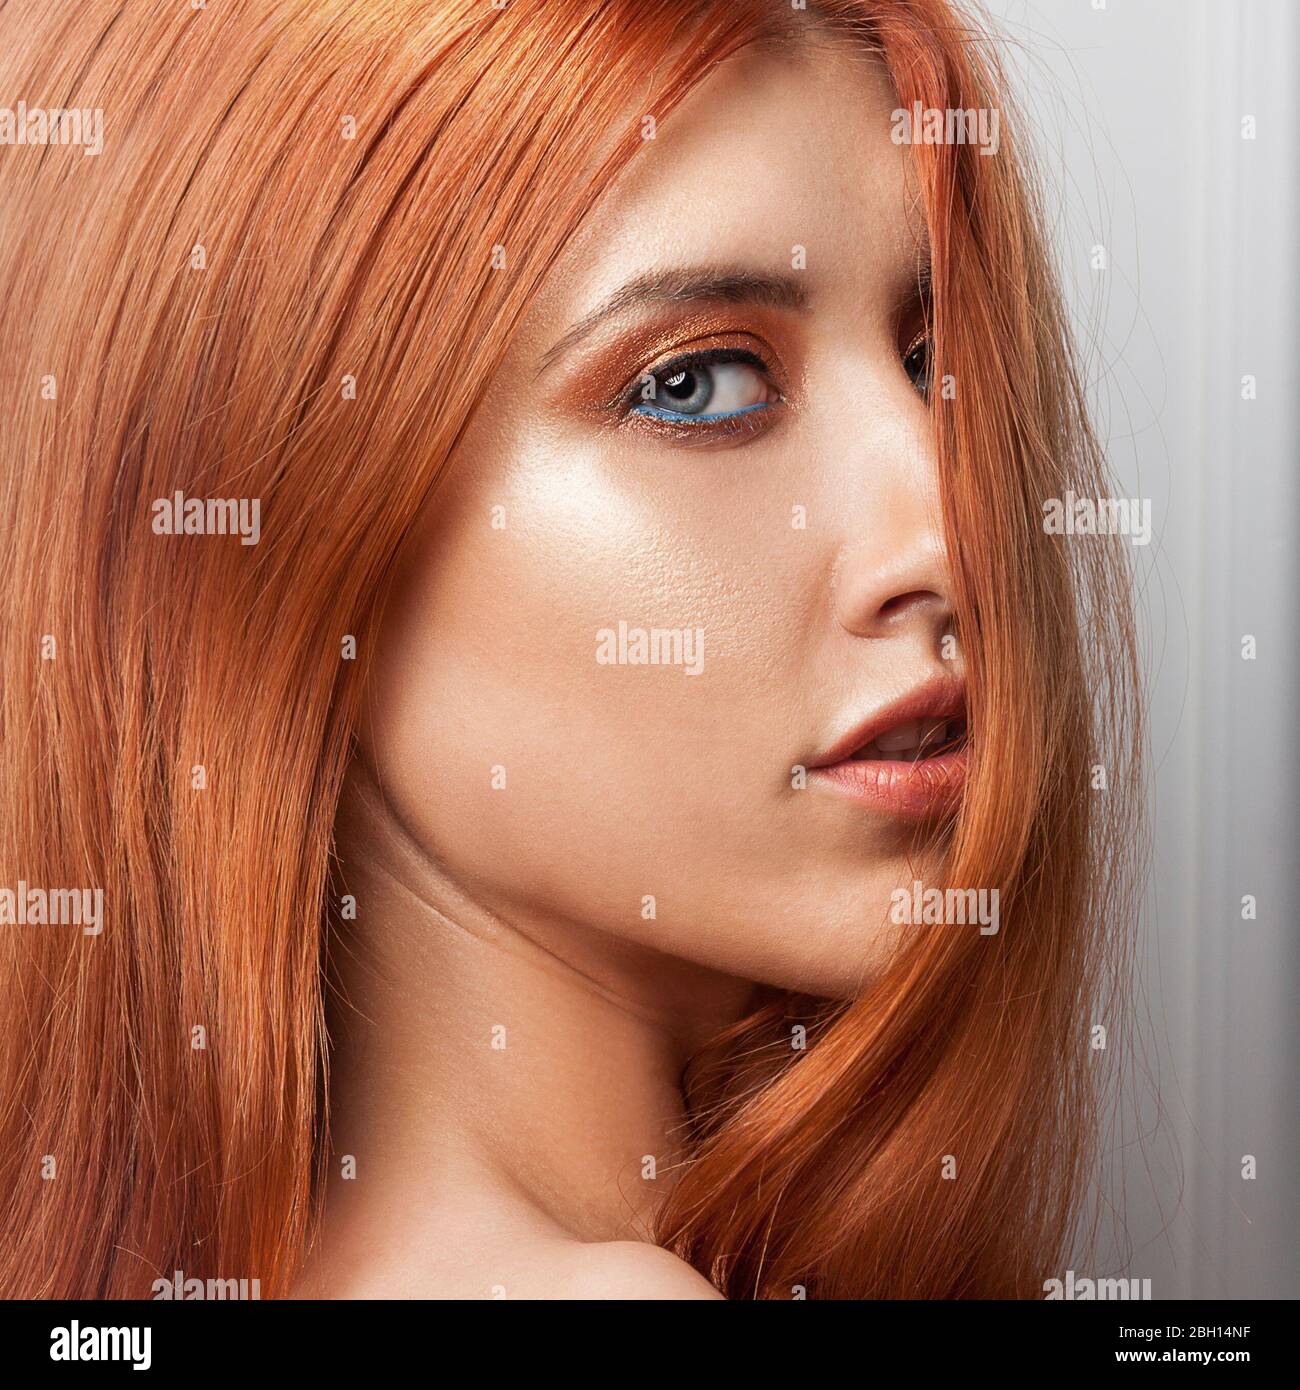 Beautiful fashionable ginger woman. Portrait of a fashion model with orange eye makeup. Stock Photo